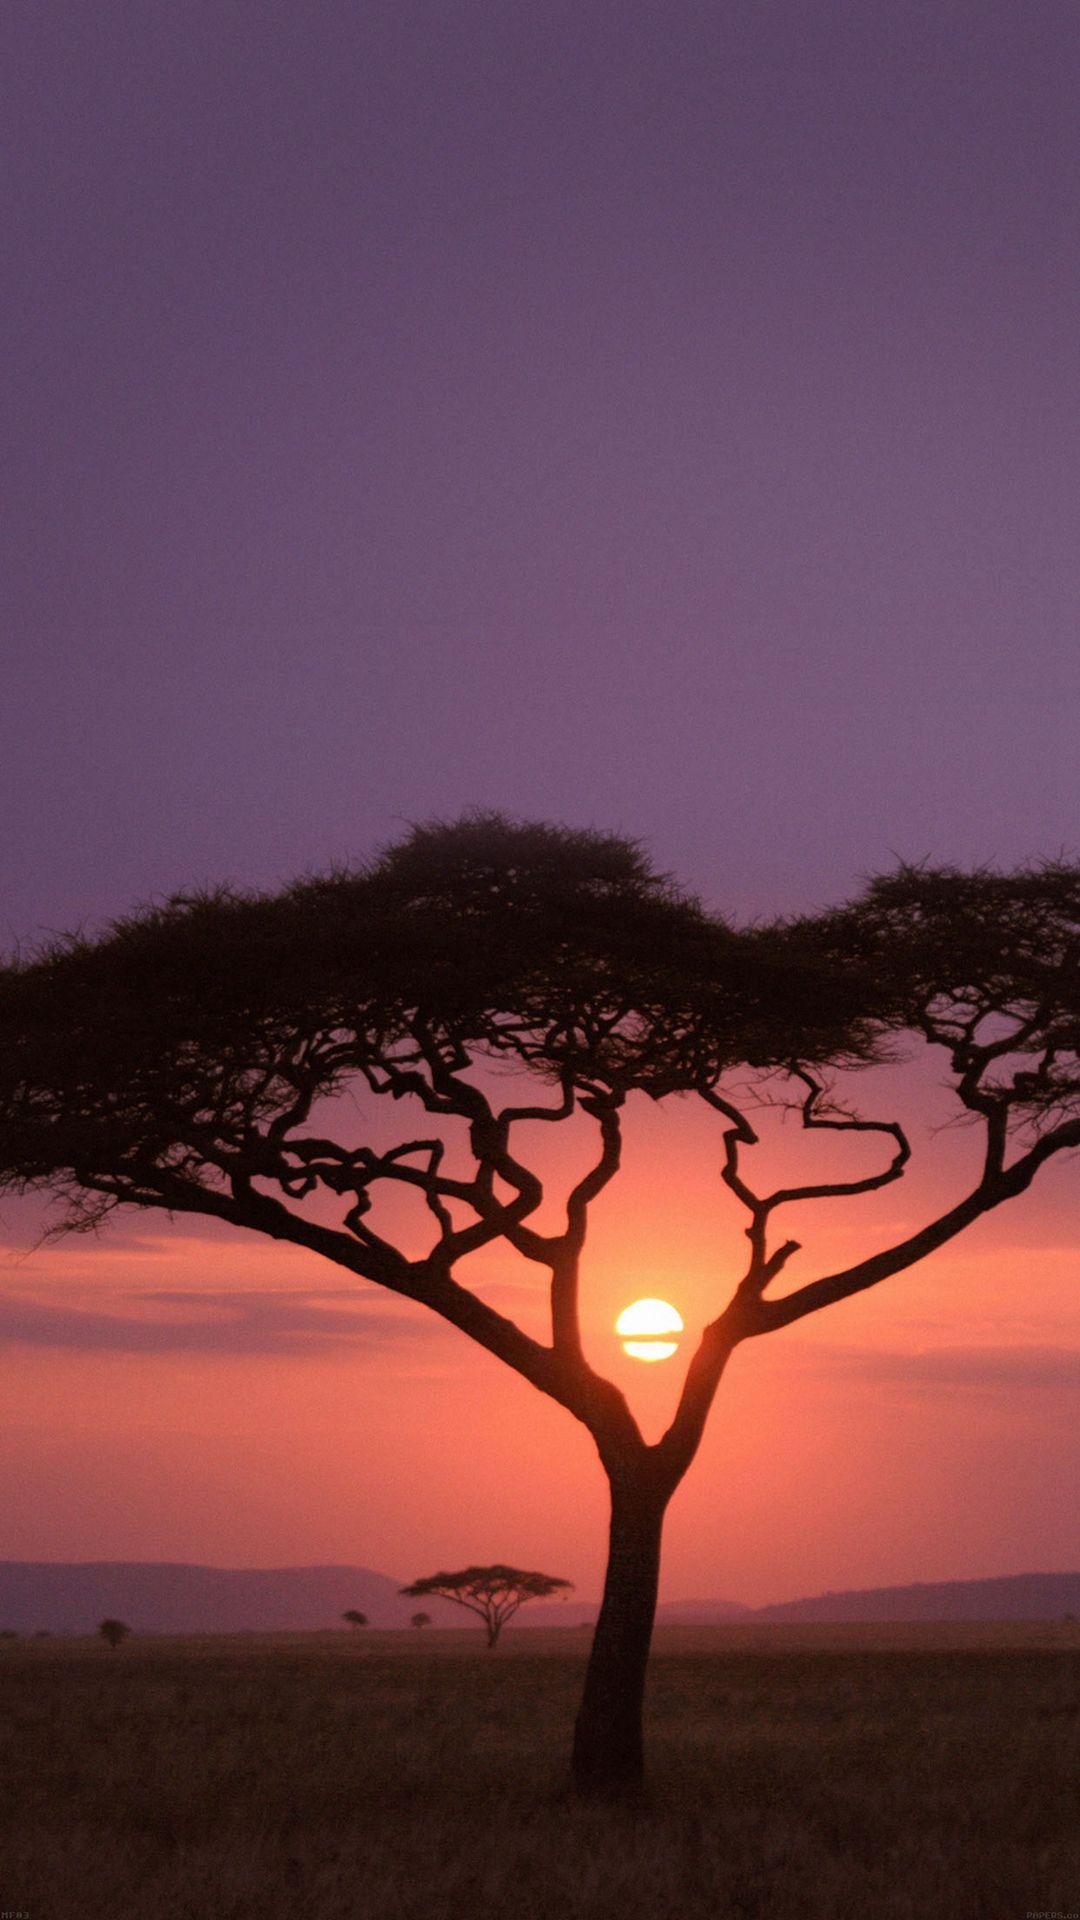 Solo Tree Safari Africa Sunset in 2019